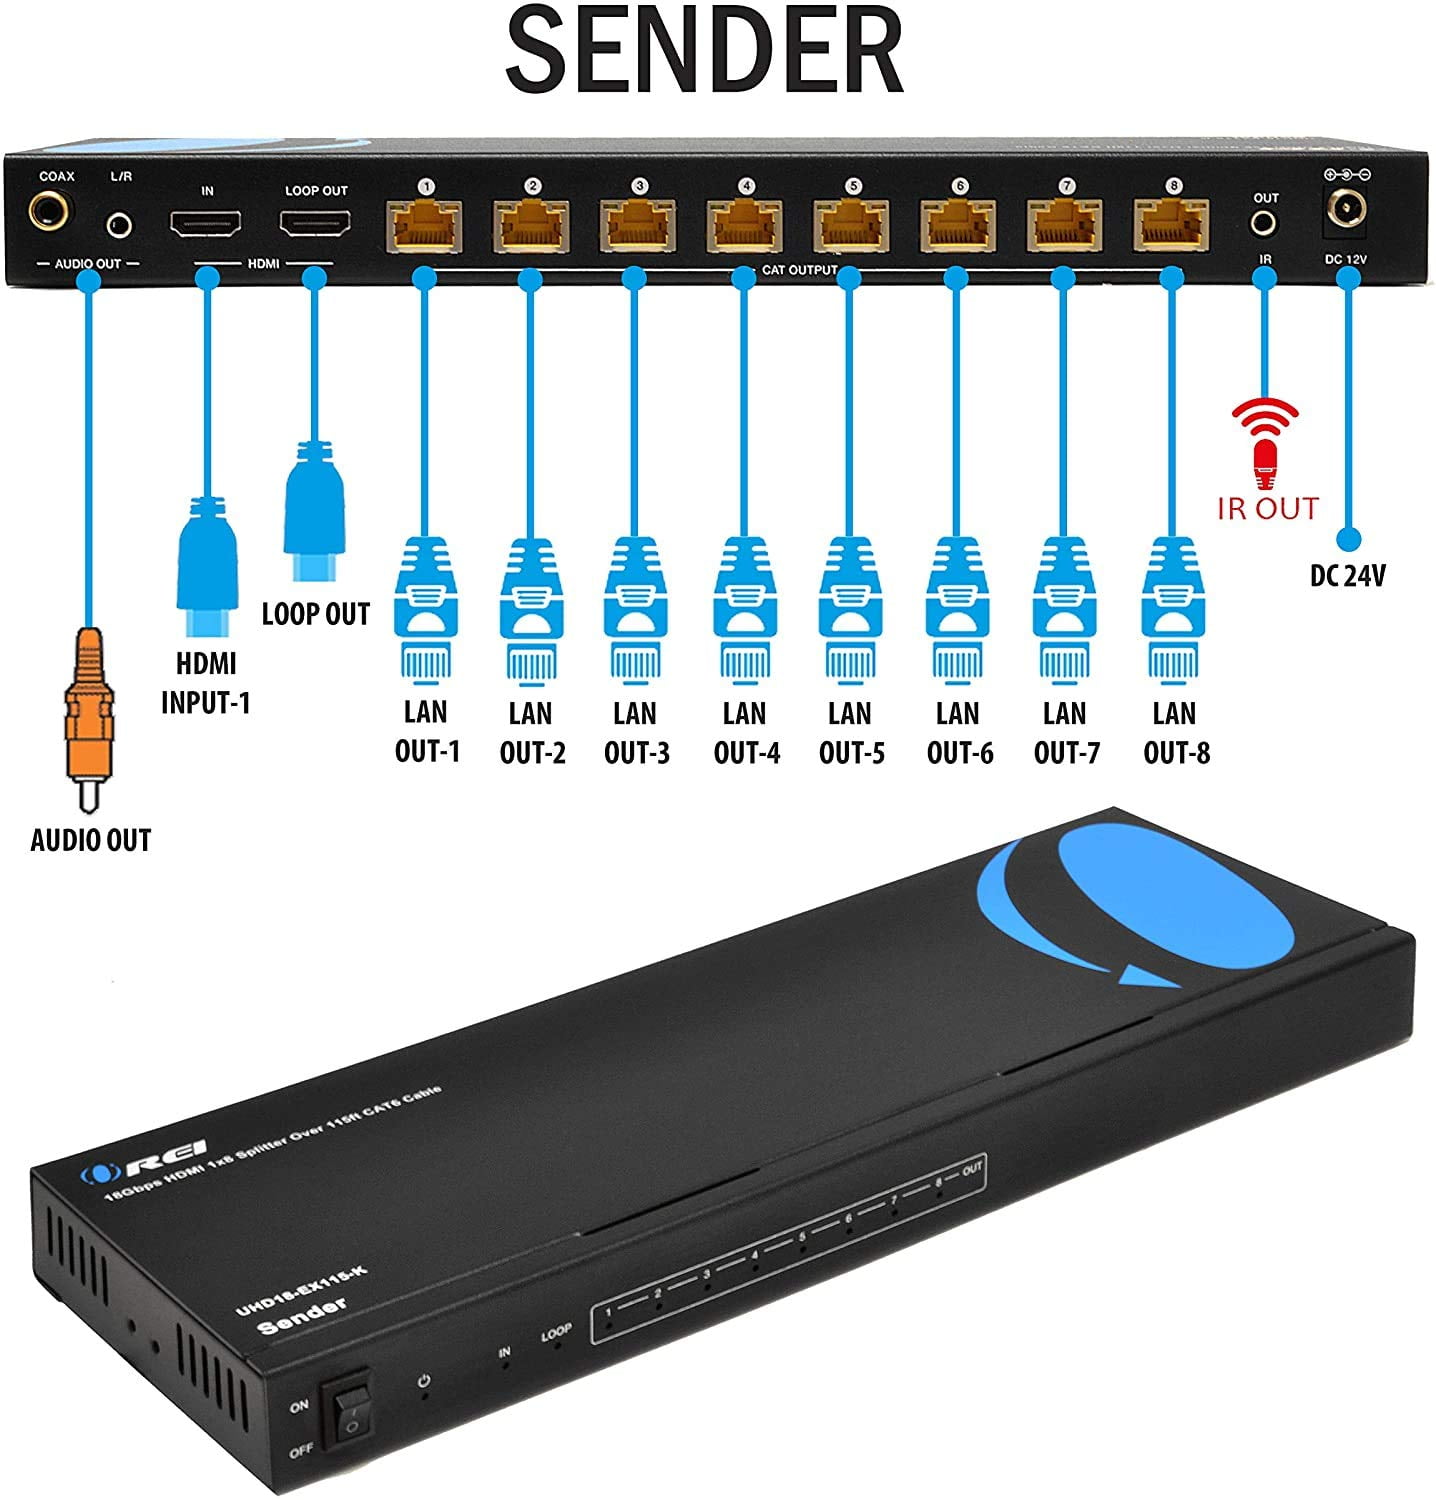 KEQINX 4K 1x8 HDMI Extender Splitter 70m/230ft HDMI Over Ethernet Spli –  Ciibo Ivy